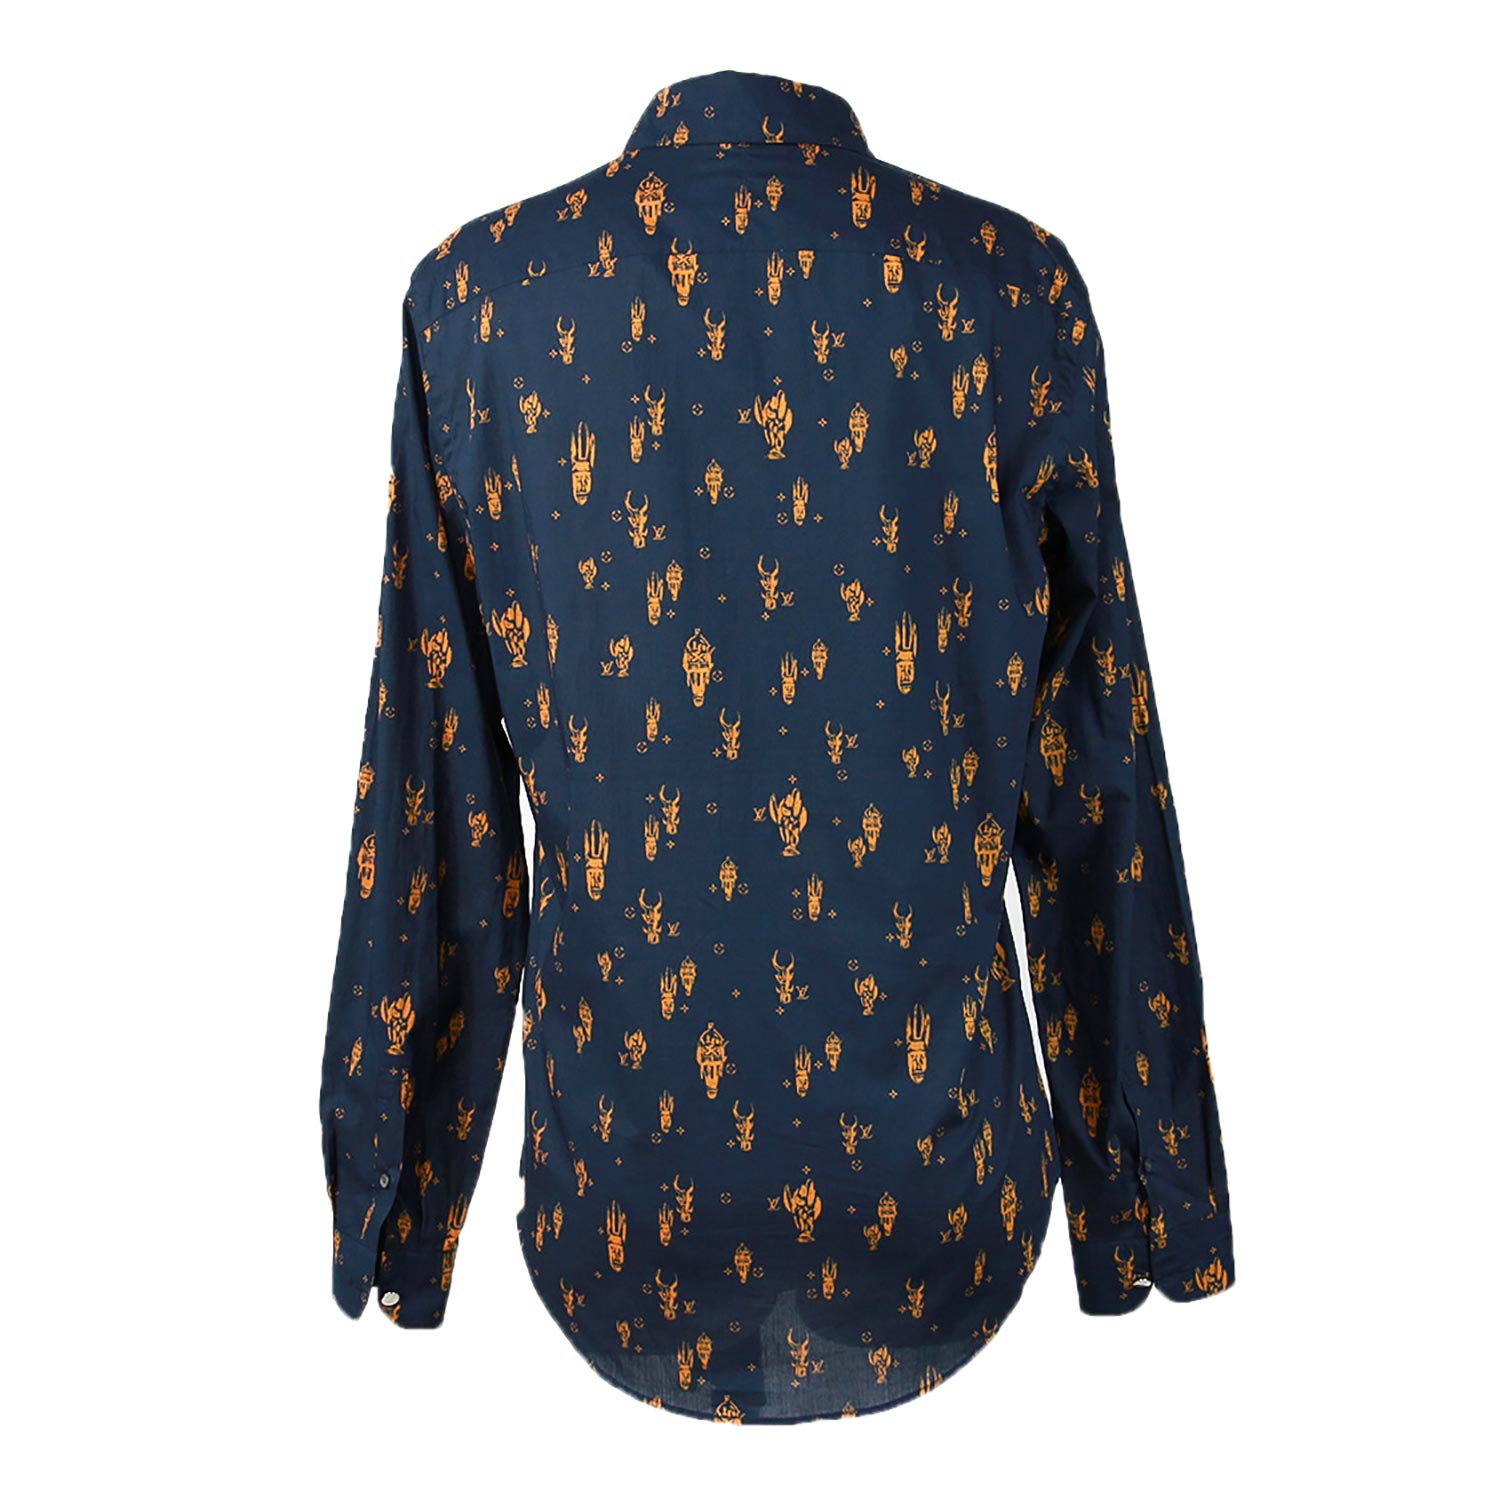 Louis Vuitton Men Casual Long Sleeve Button-Down Printed Shirt S US / LV S | eBay